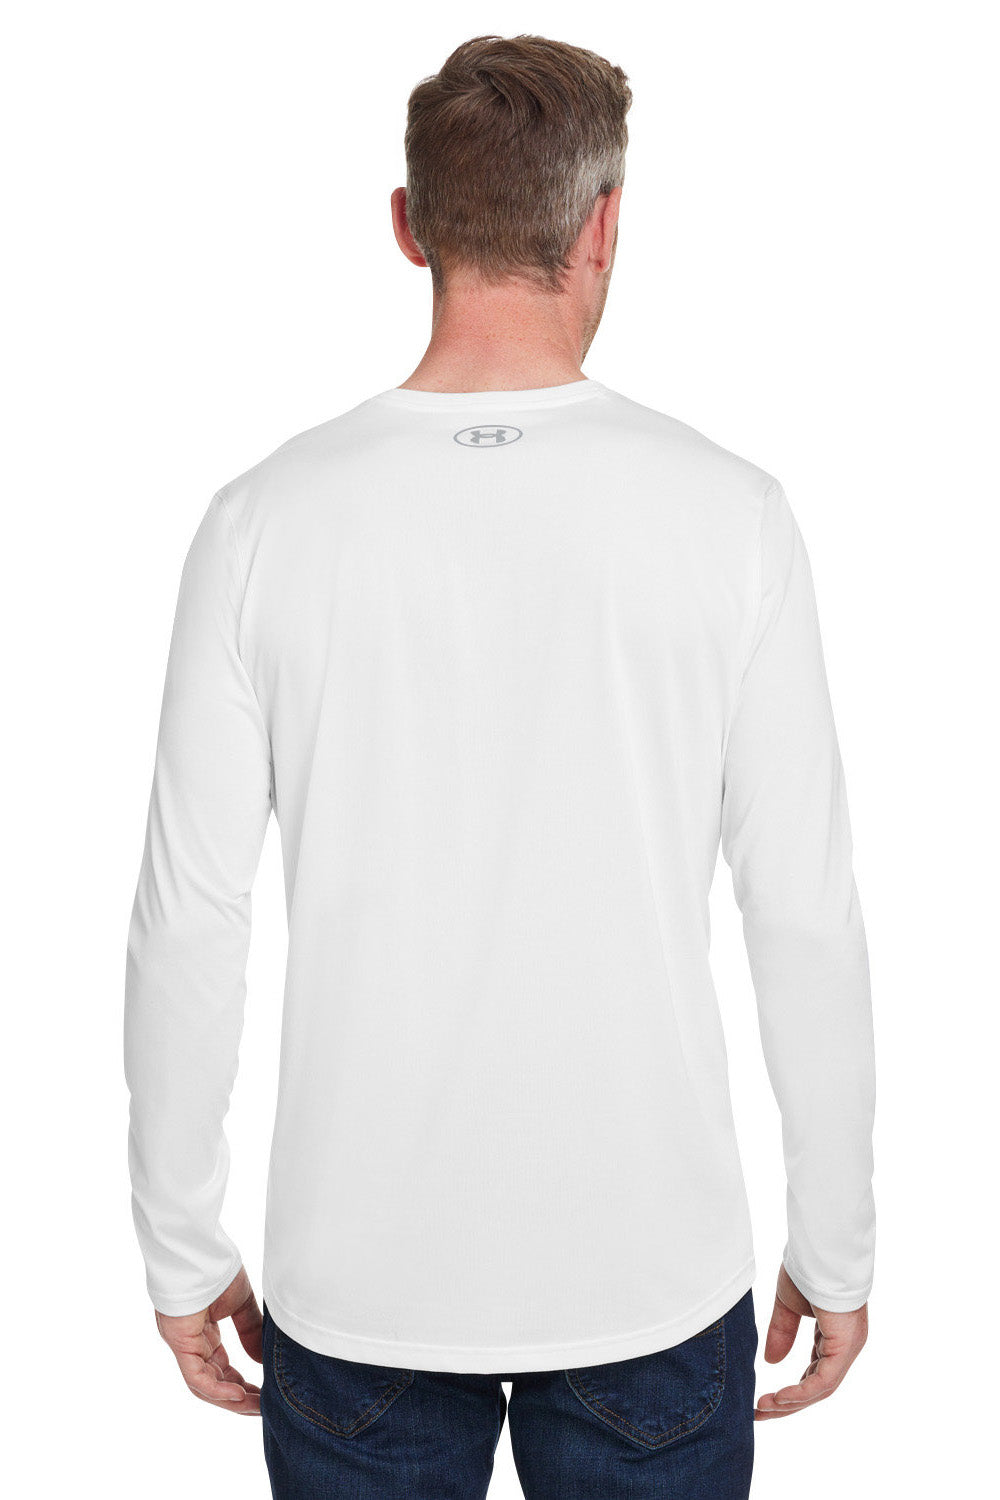 Under Armour 1376843 Mens Team Tech Moisture Wicking Long Sleeve Crewneck T-Shirt White Model Back